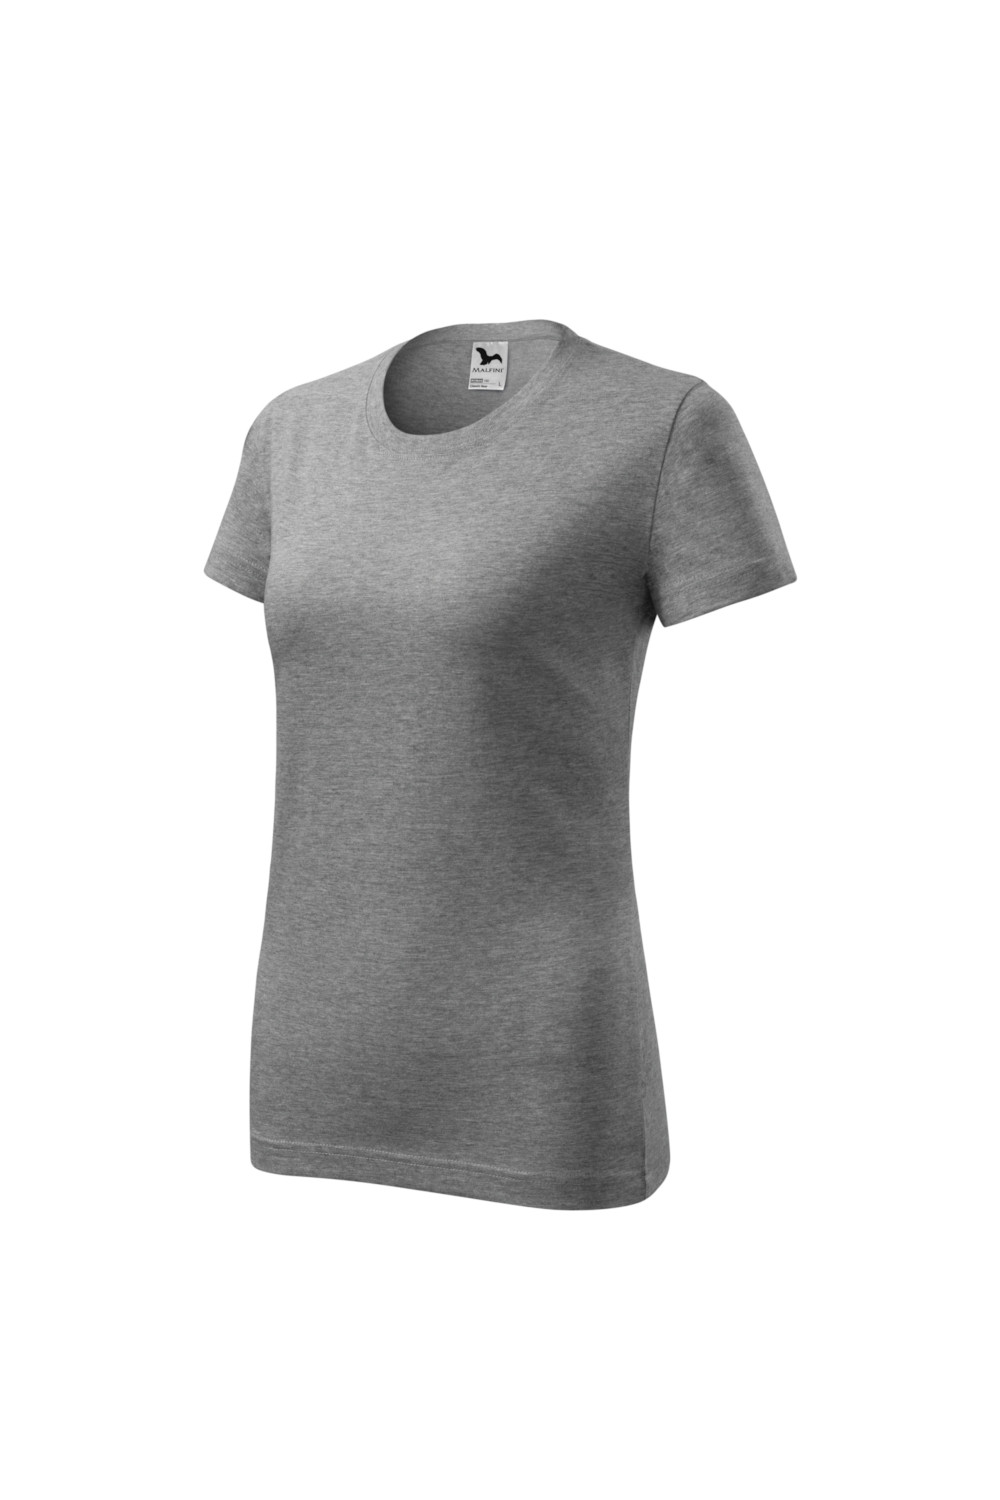 CLASSIC 133 MALFINI Koszulka damska 100% bawełna t-shirt ciemnoszary melanż